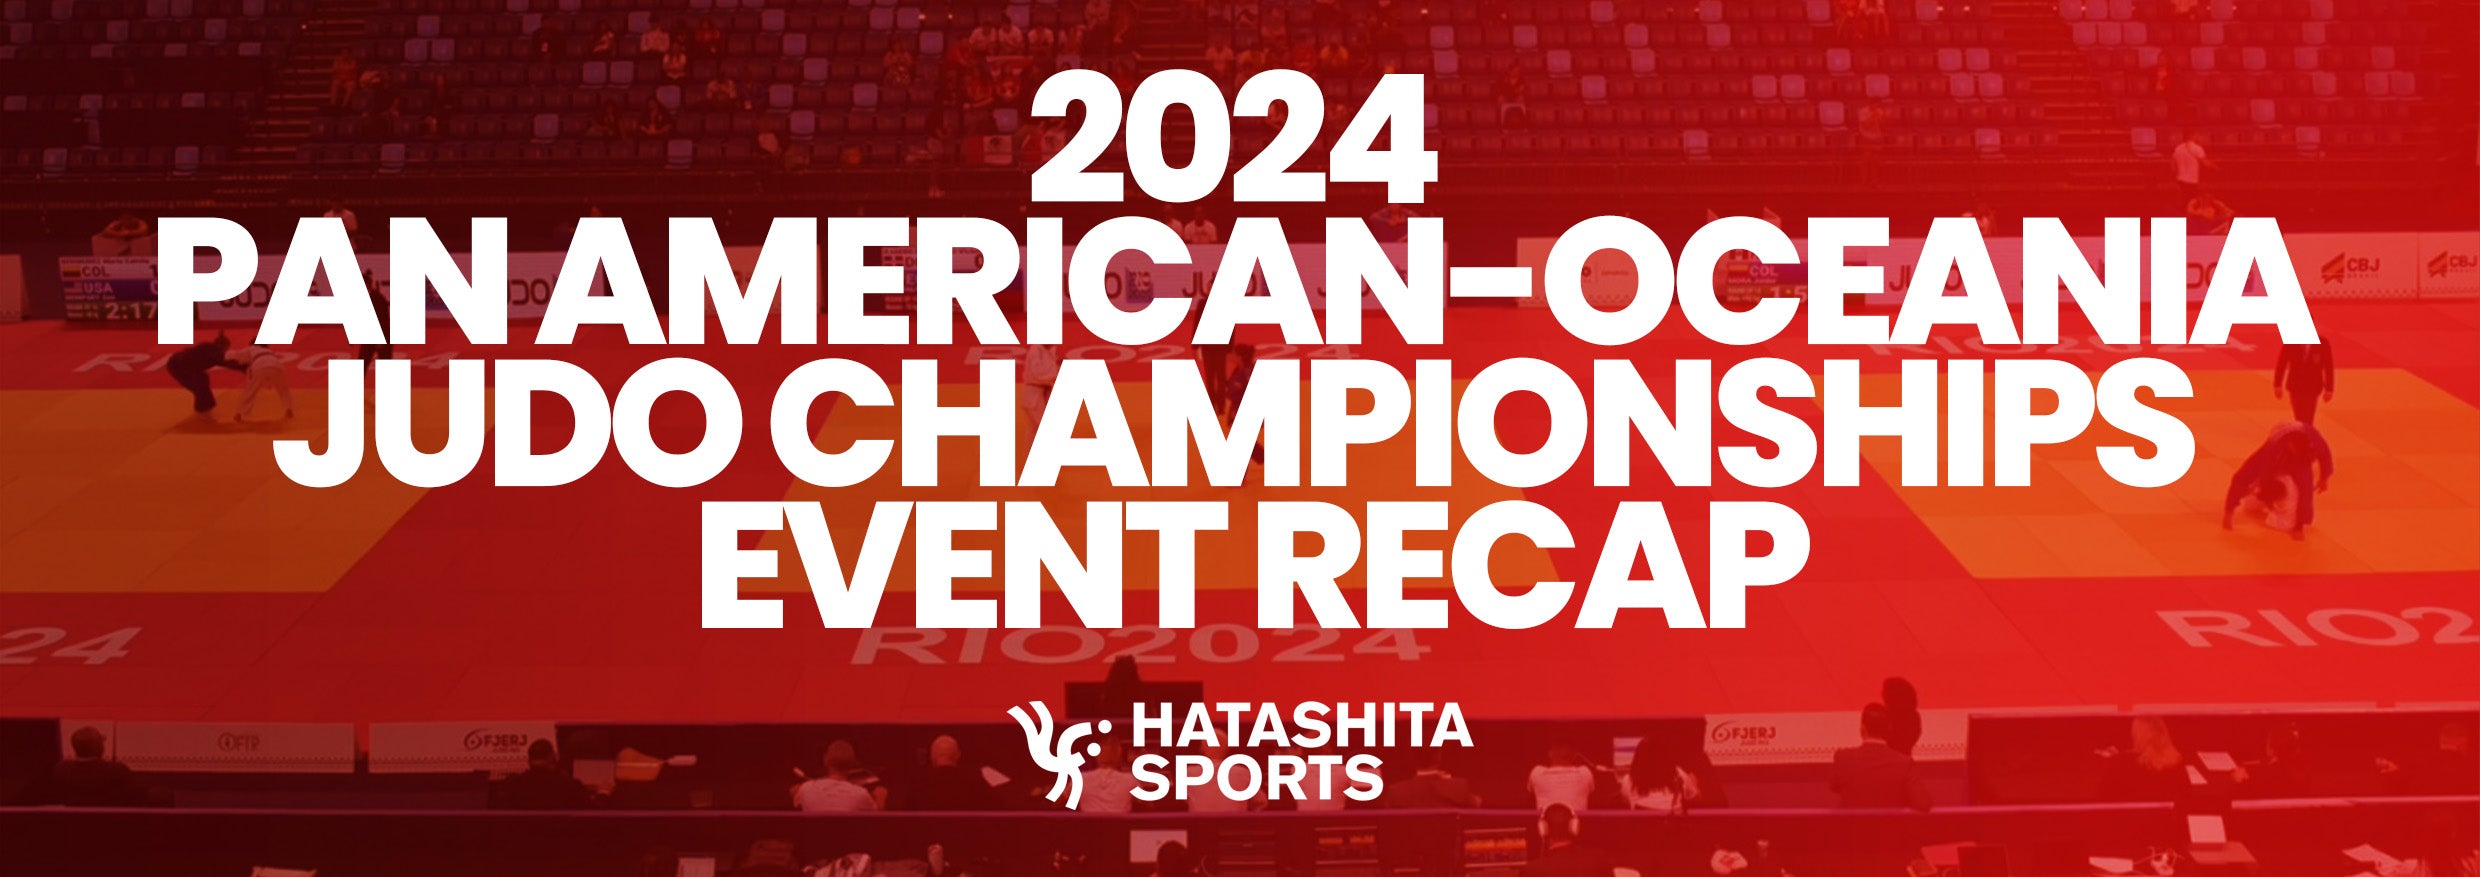 2024 Pan American-Oceania Championships Event Recap